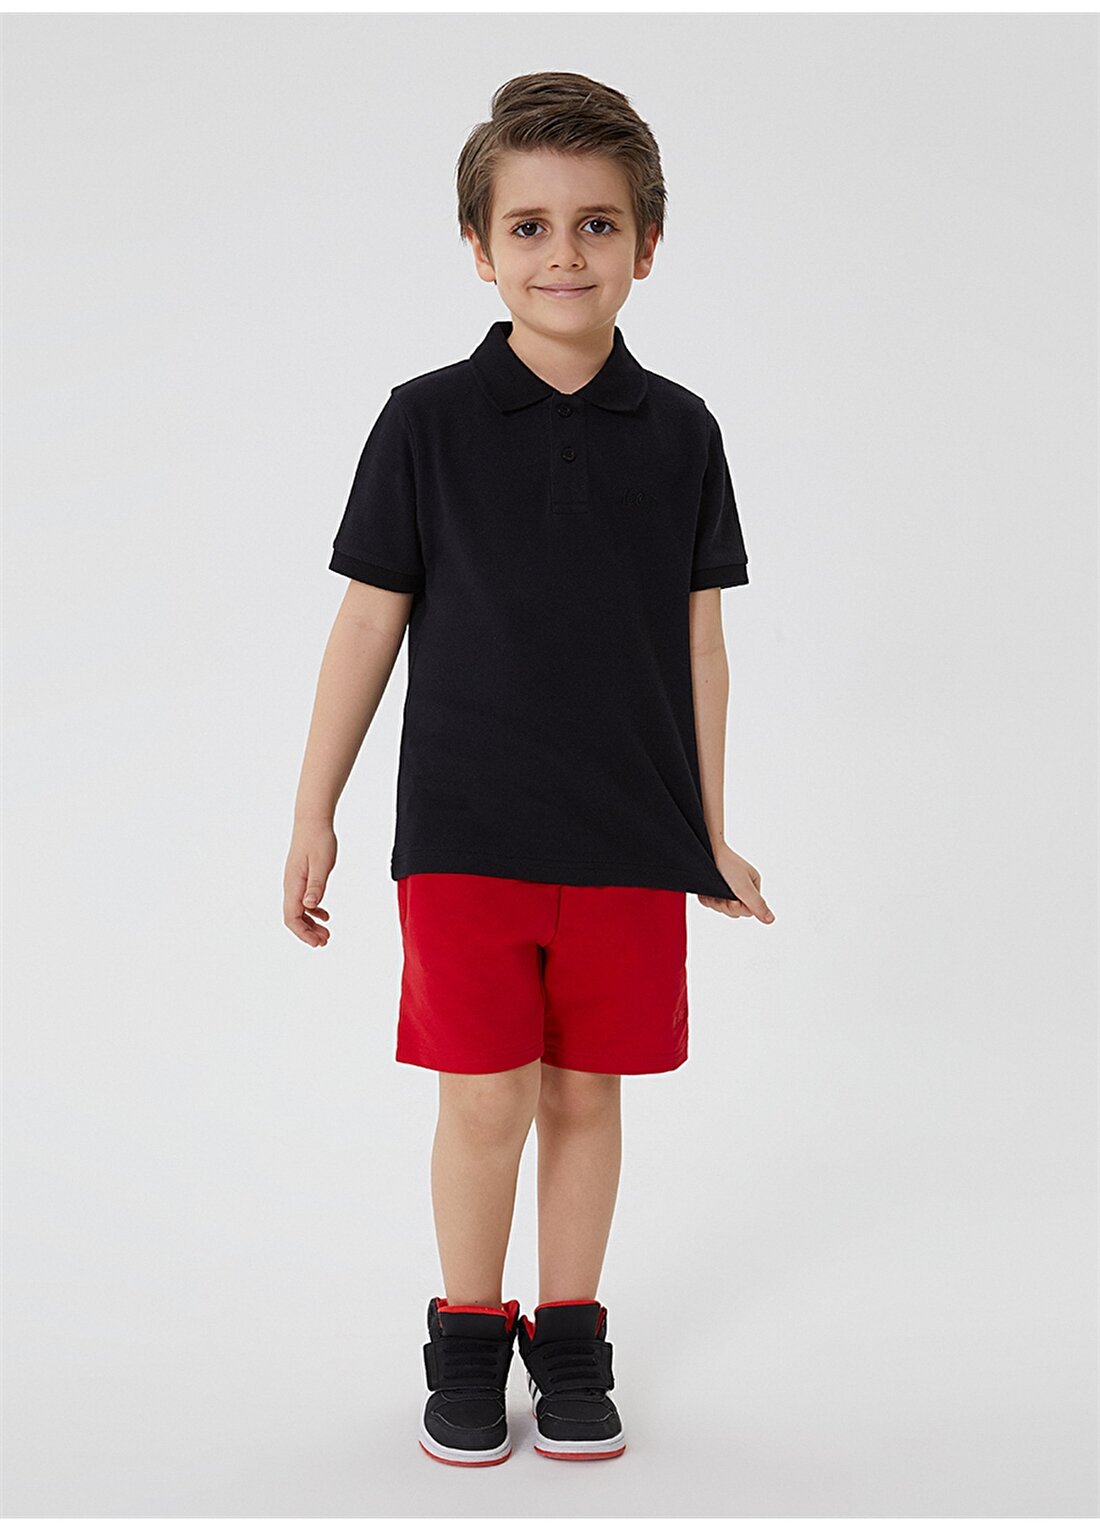 Lee Cooper Pike Siyah Erkek Çocuk Polo T-Shirt 212 LCB 242004 TWINS SIYAH